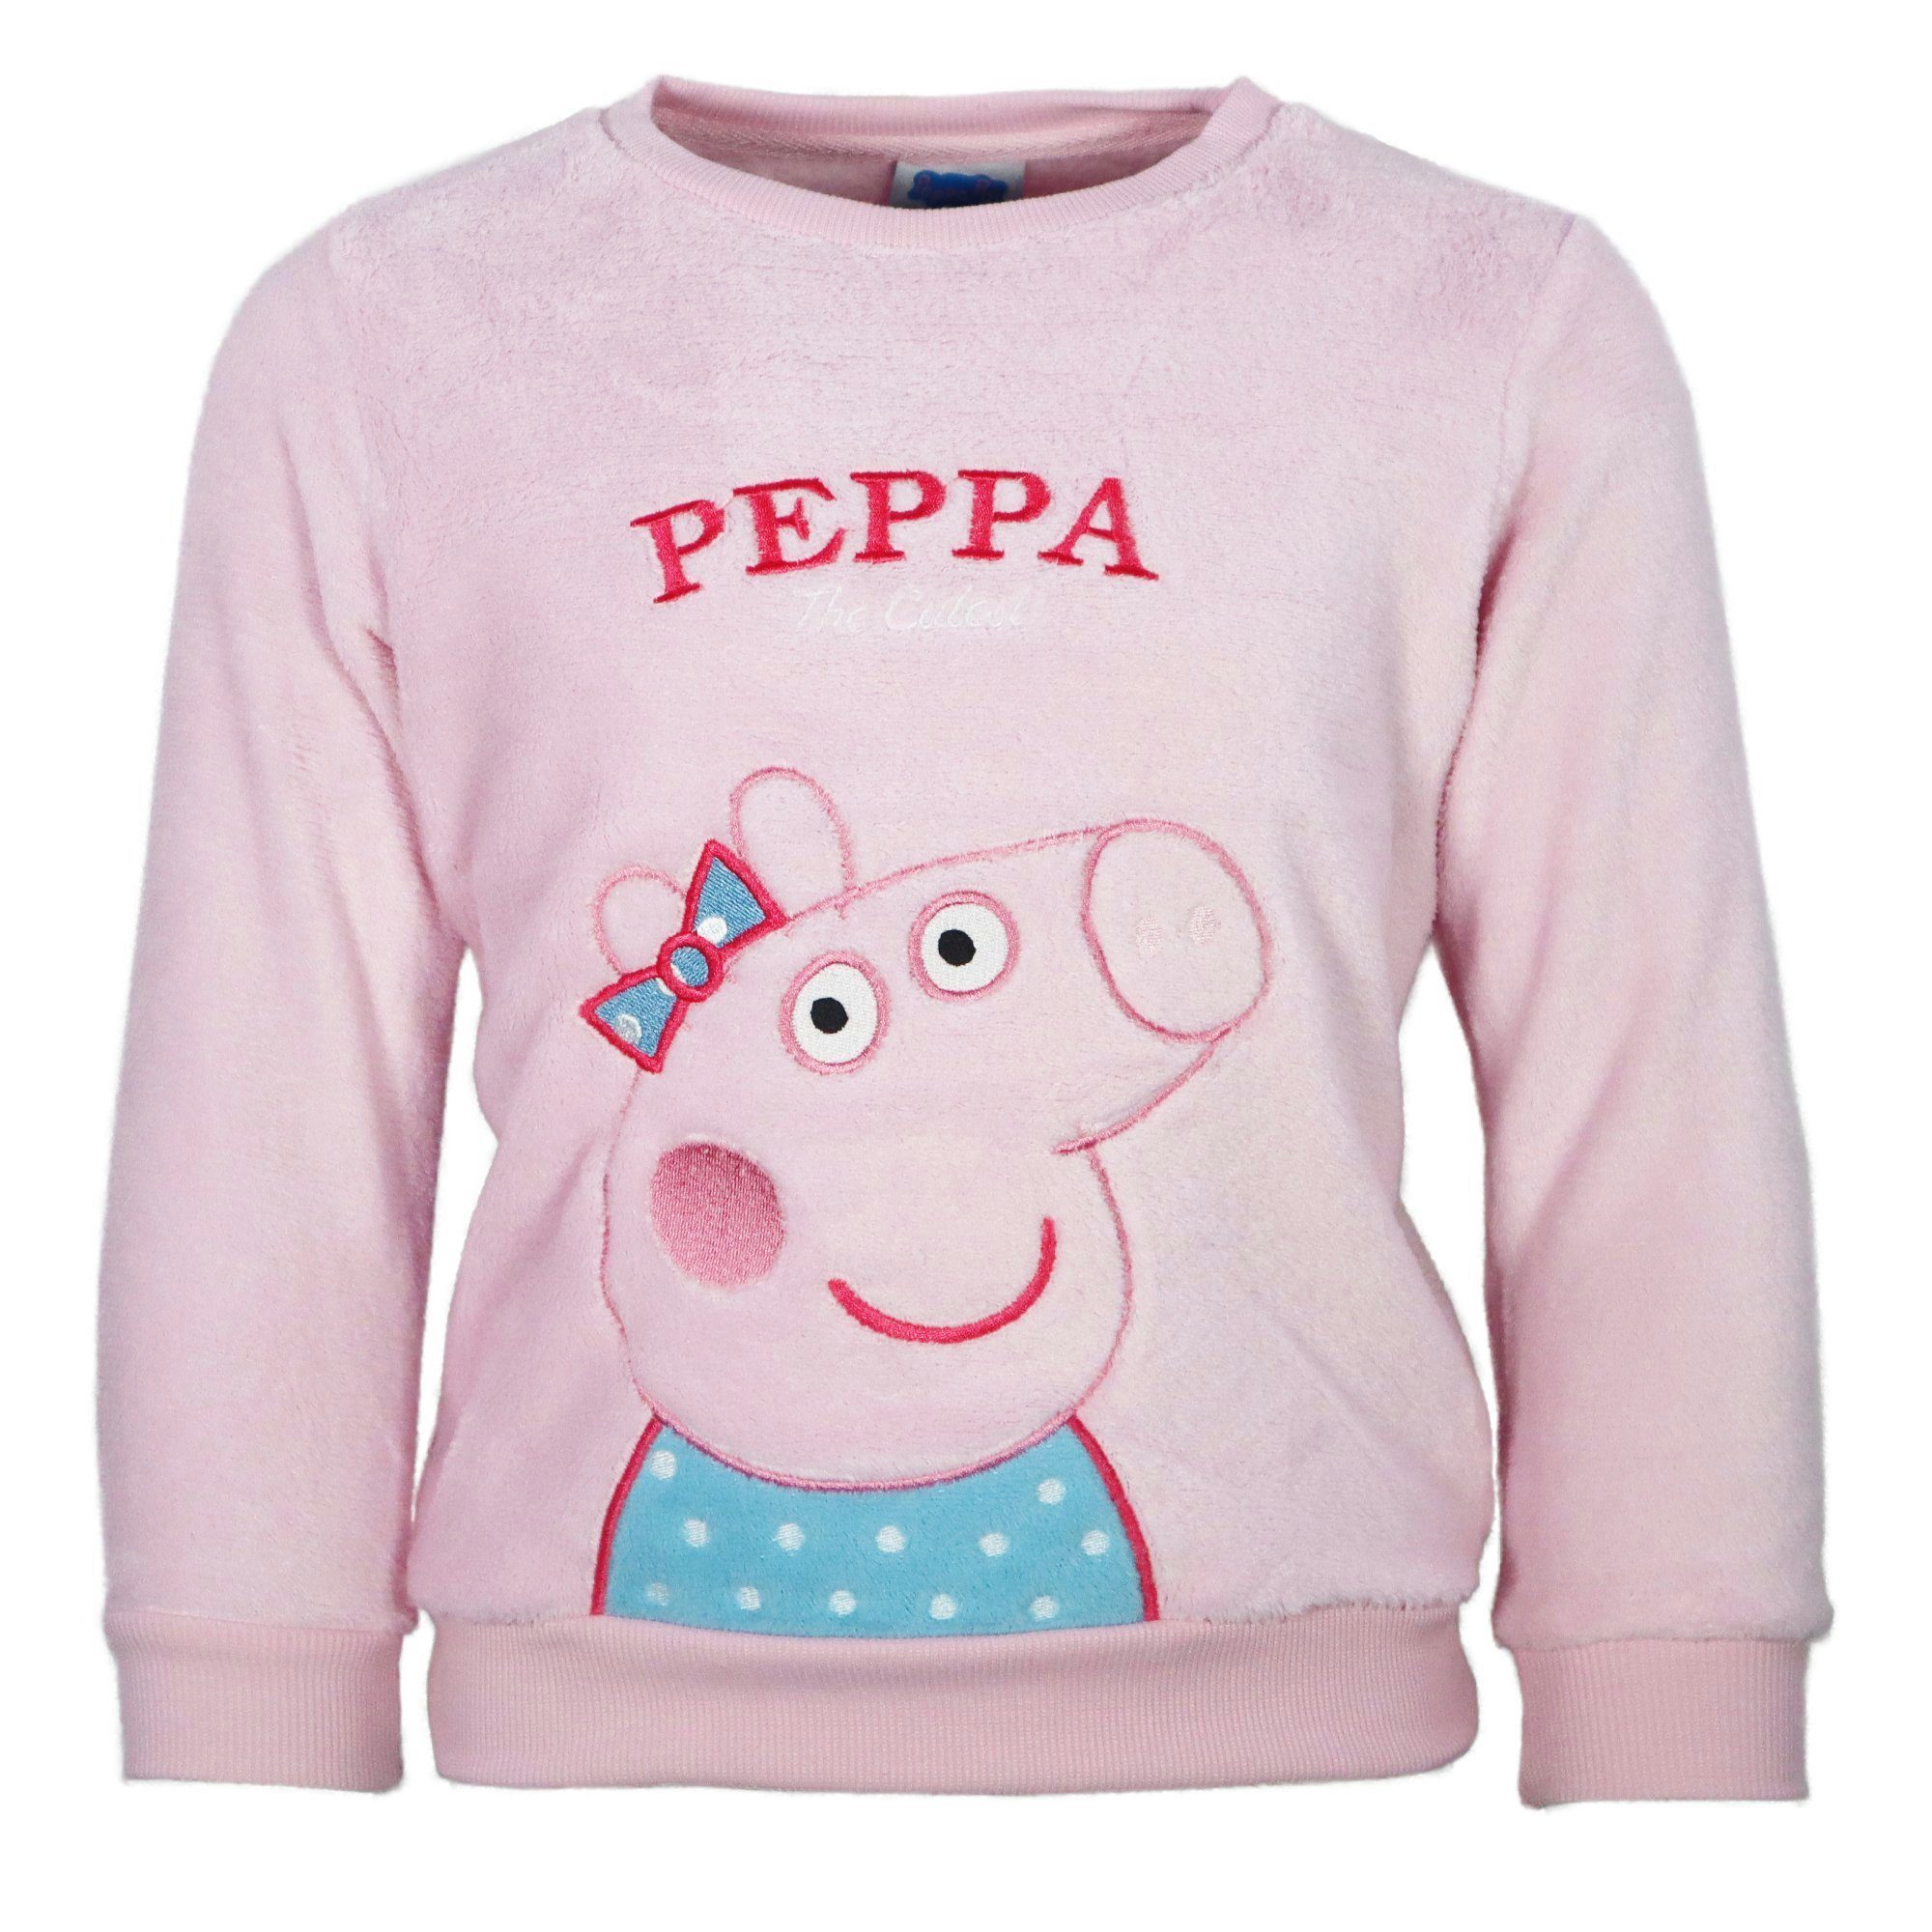 Peppa Pig Sweater Peppa Pig Wutz Mädchen Kinder Coral Fleece Pullover Pulli Gr. 98 bis 116